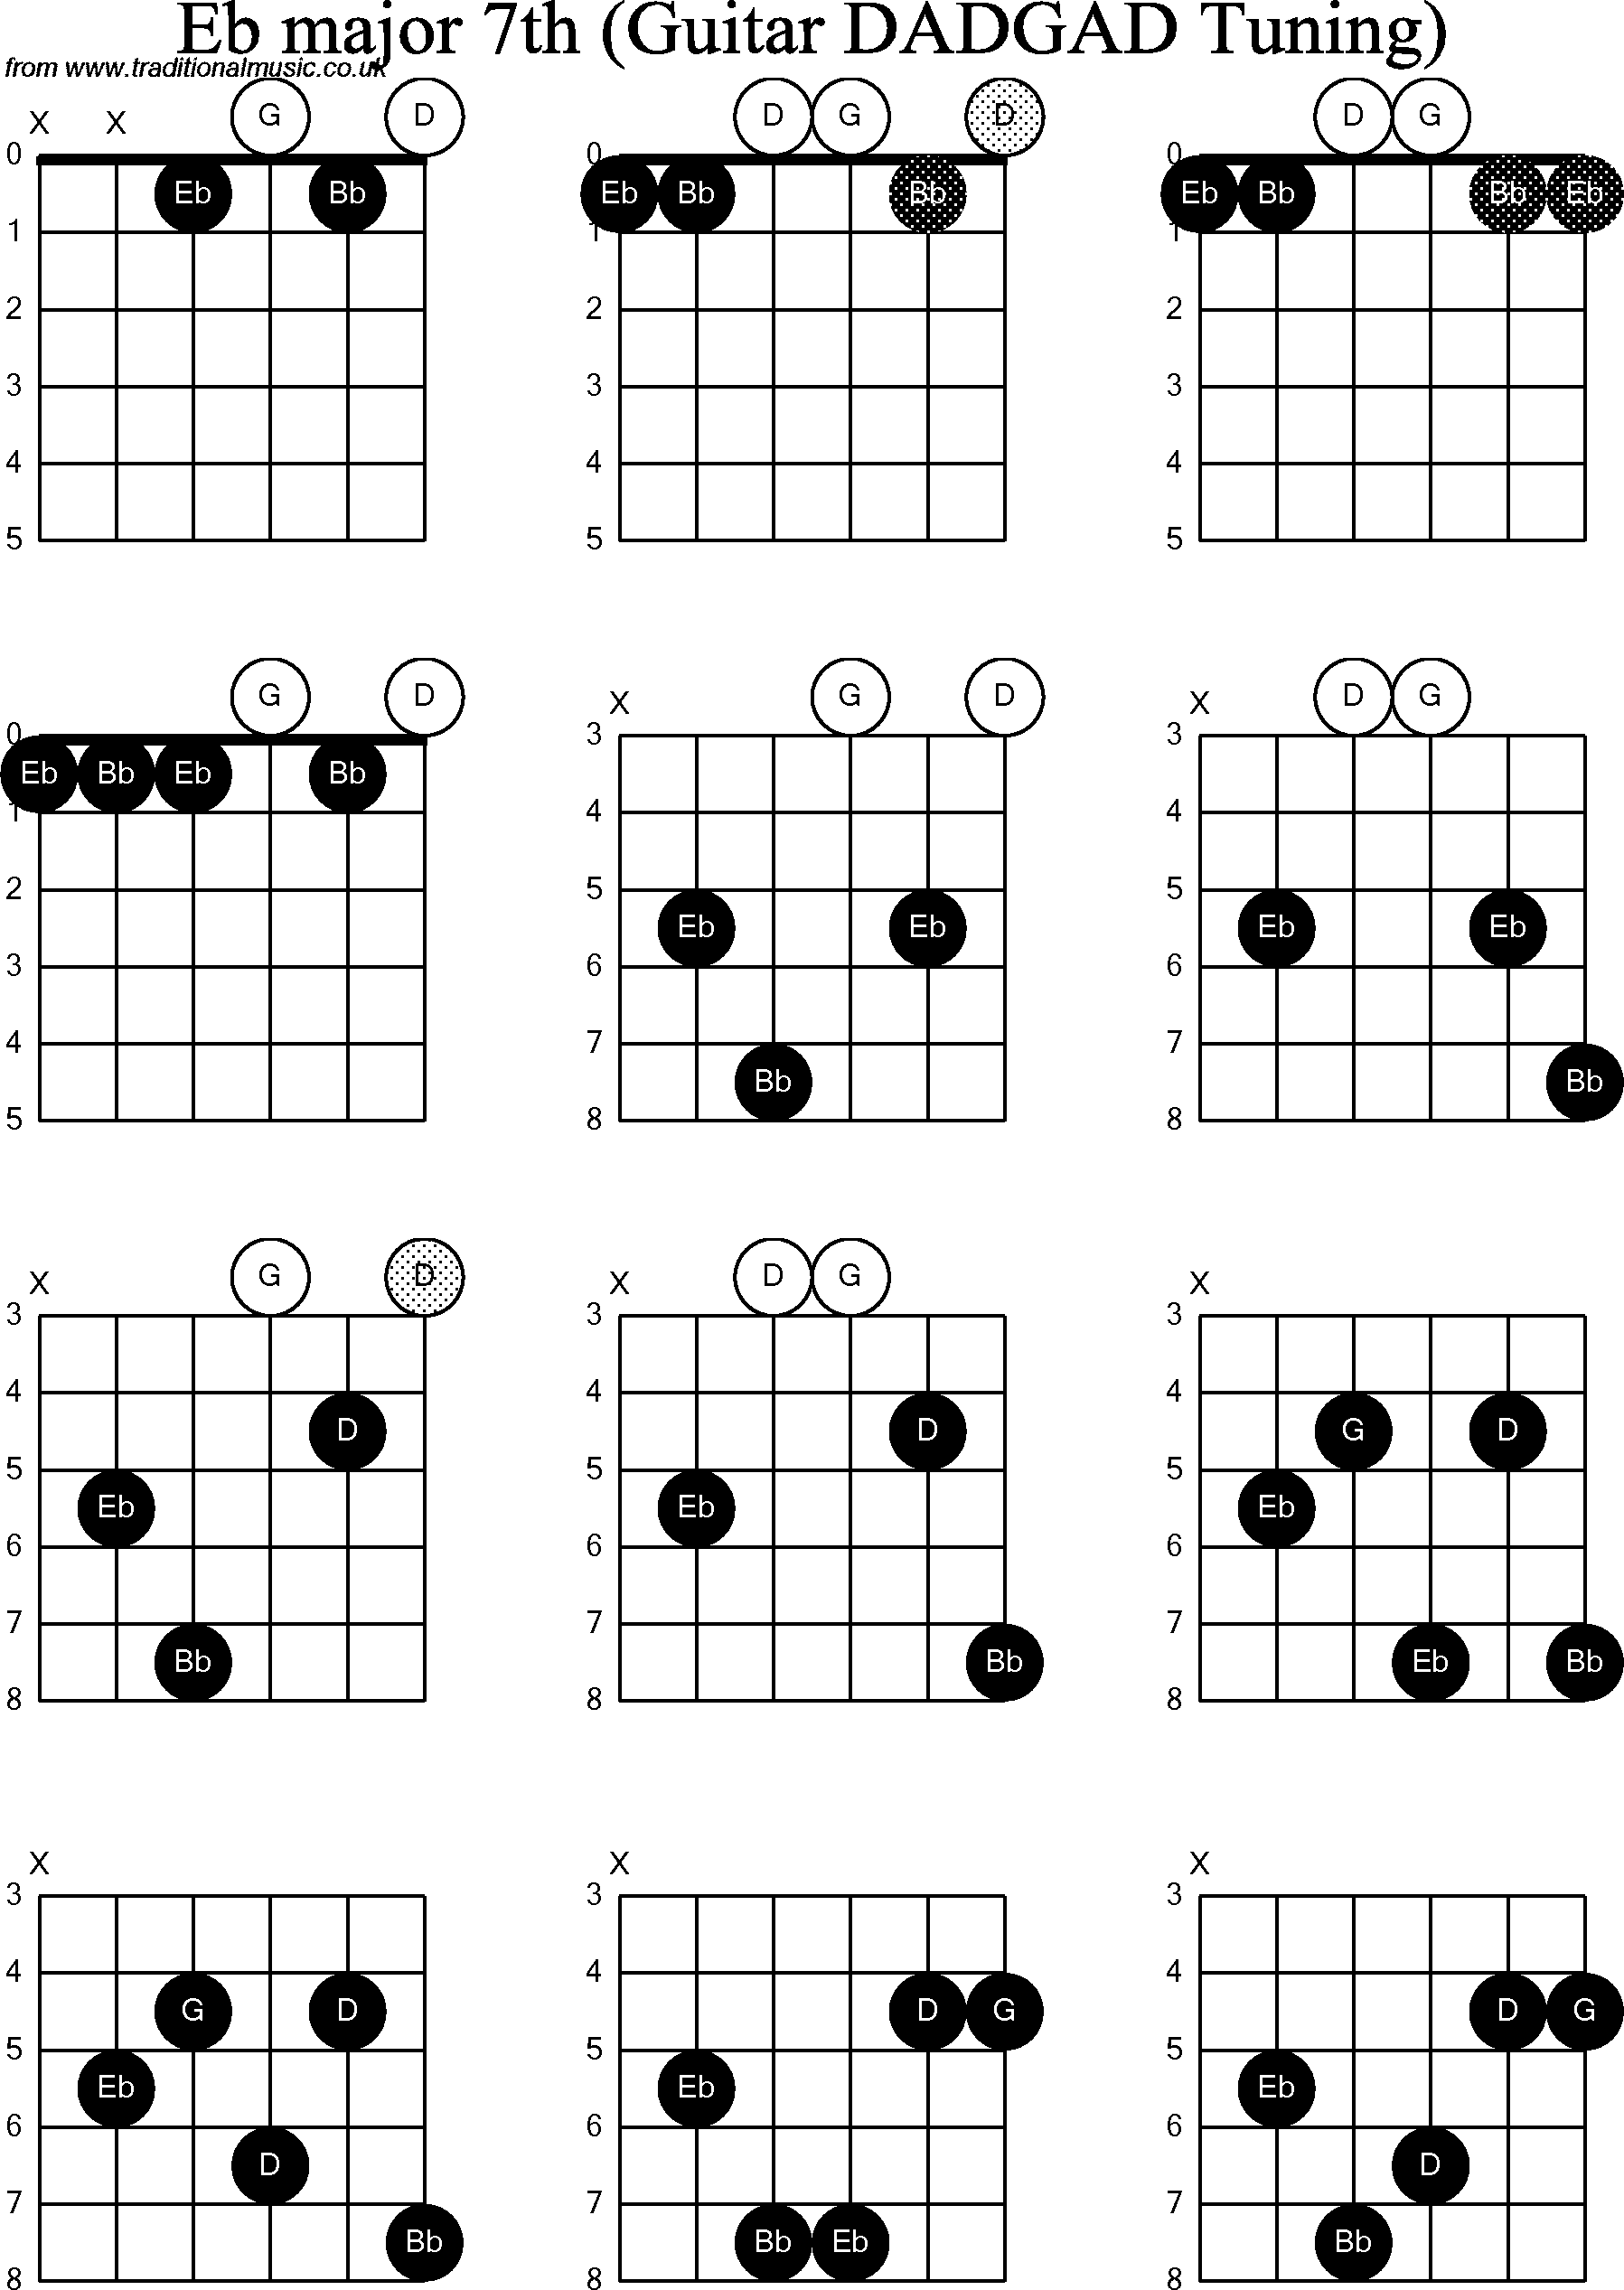 Chord Diagrams for D Modal Guitar(DADGAD), Eb Major7th